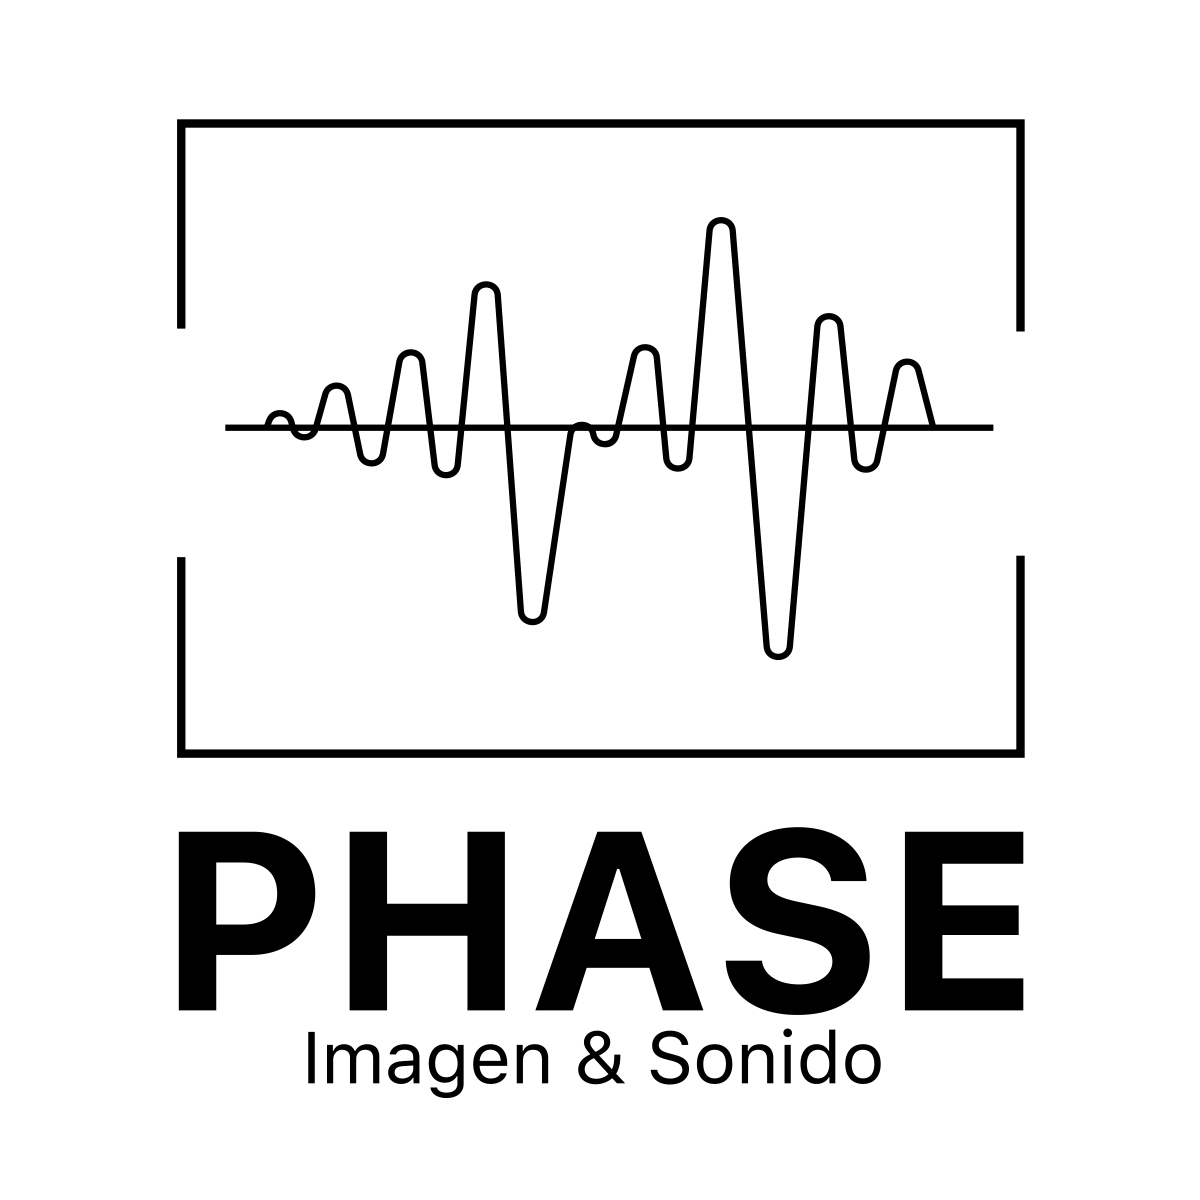 Logo Phase Imagen & Sonido